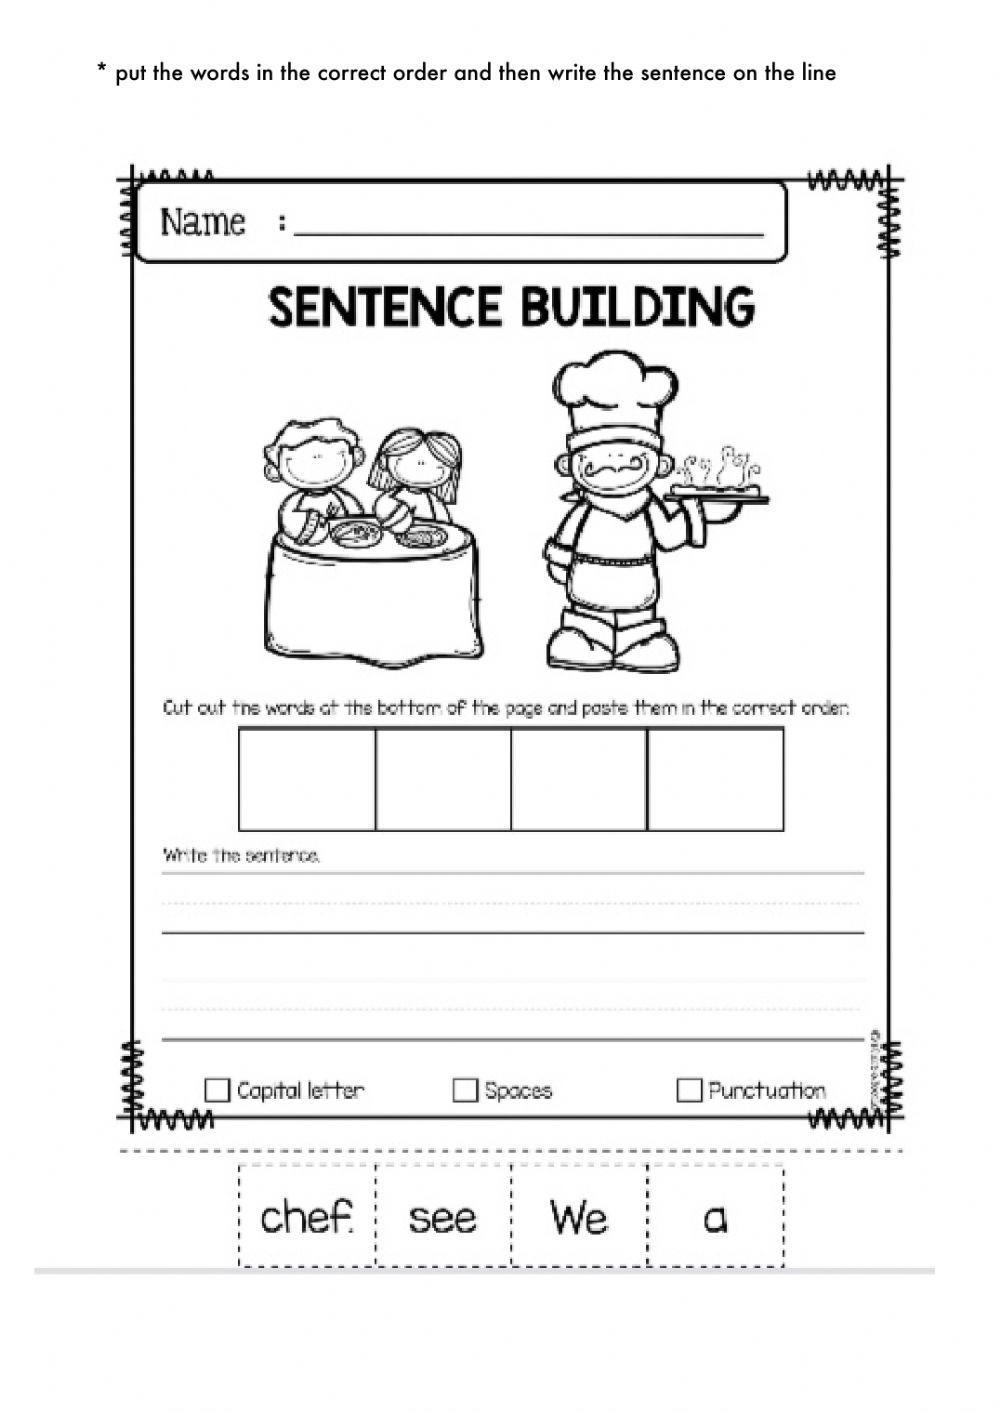 Sentence building 2